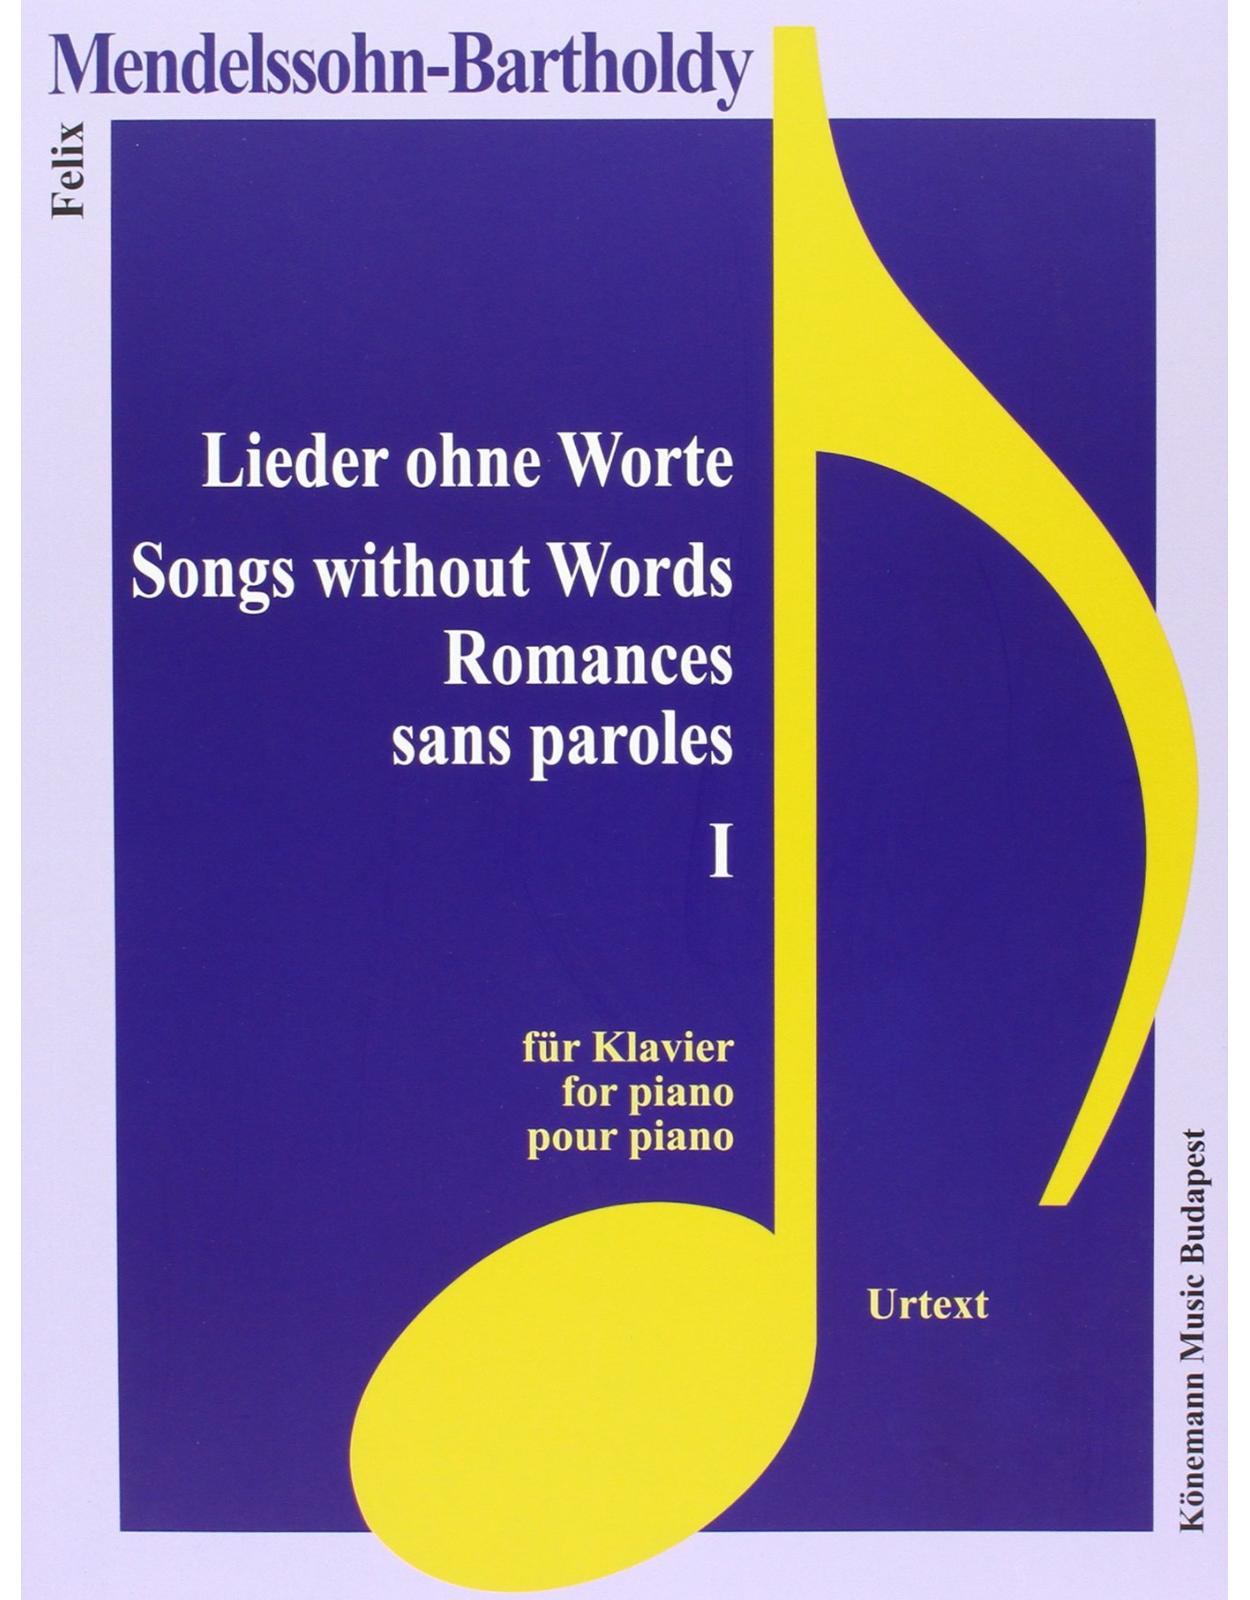 Mendelssohn-Bartholdy, Lieder ohne Worte I 